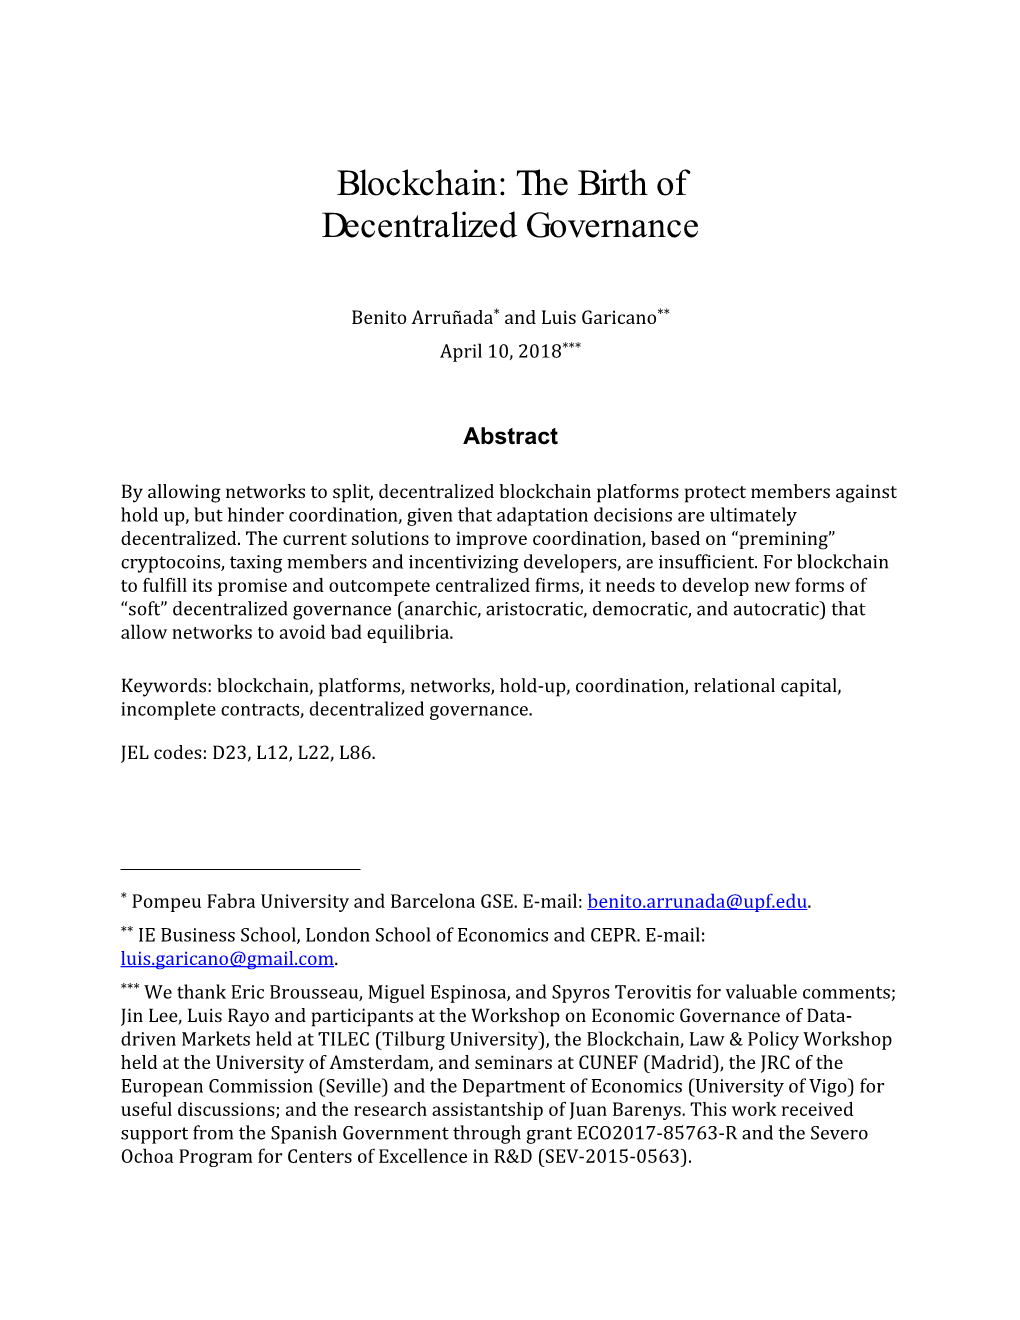 Blockchain: the Birth of Decentralized Governance